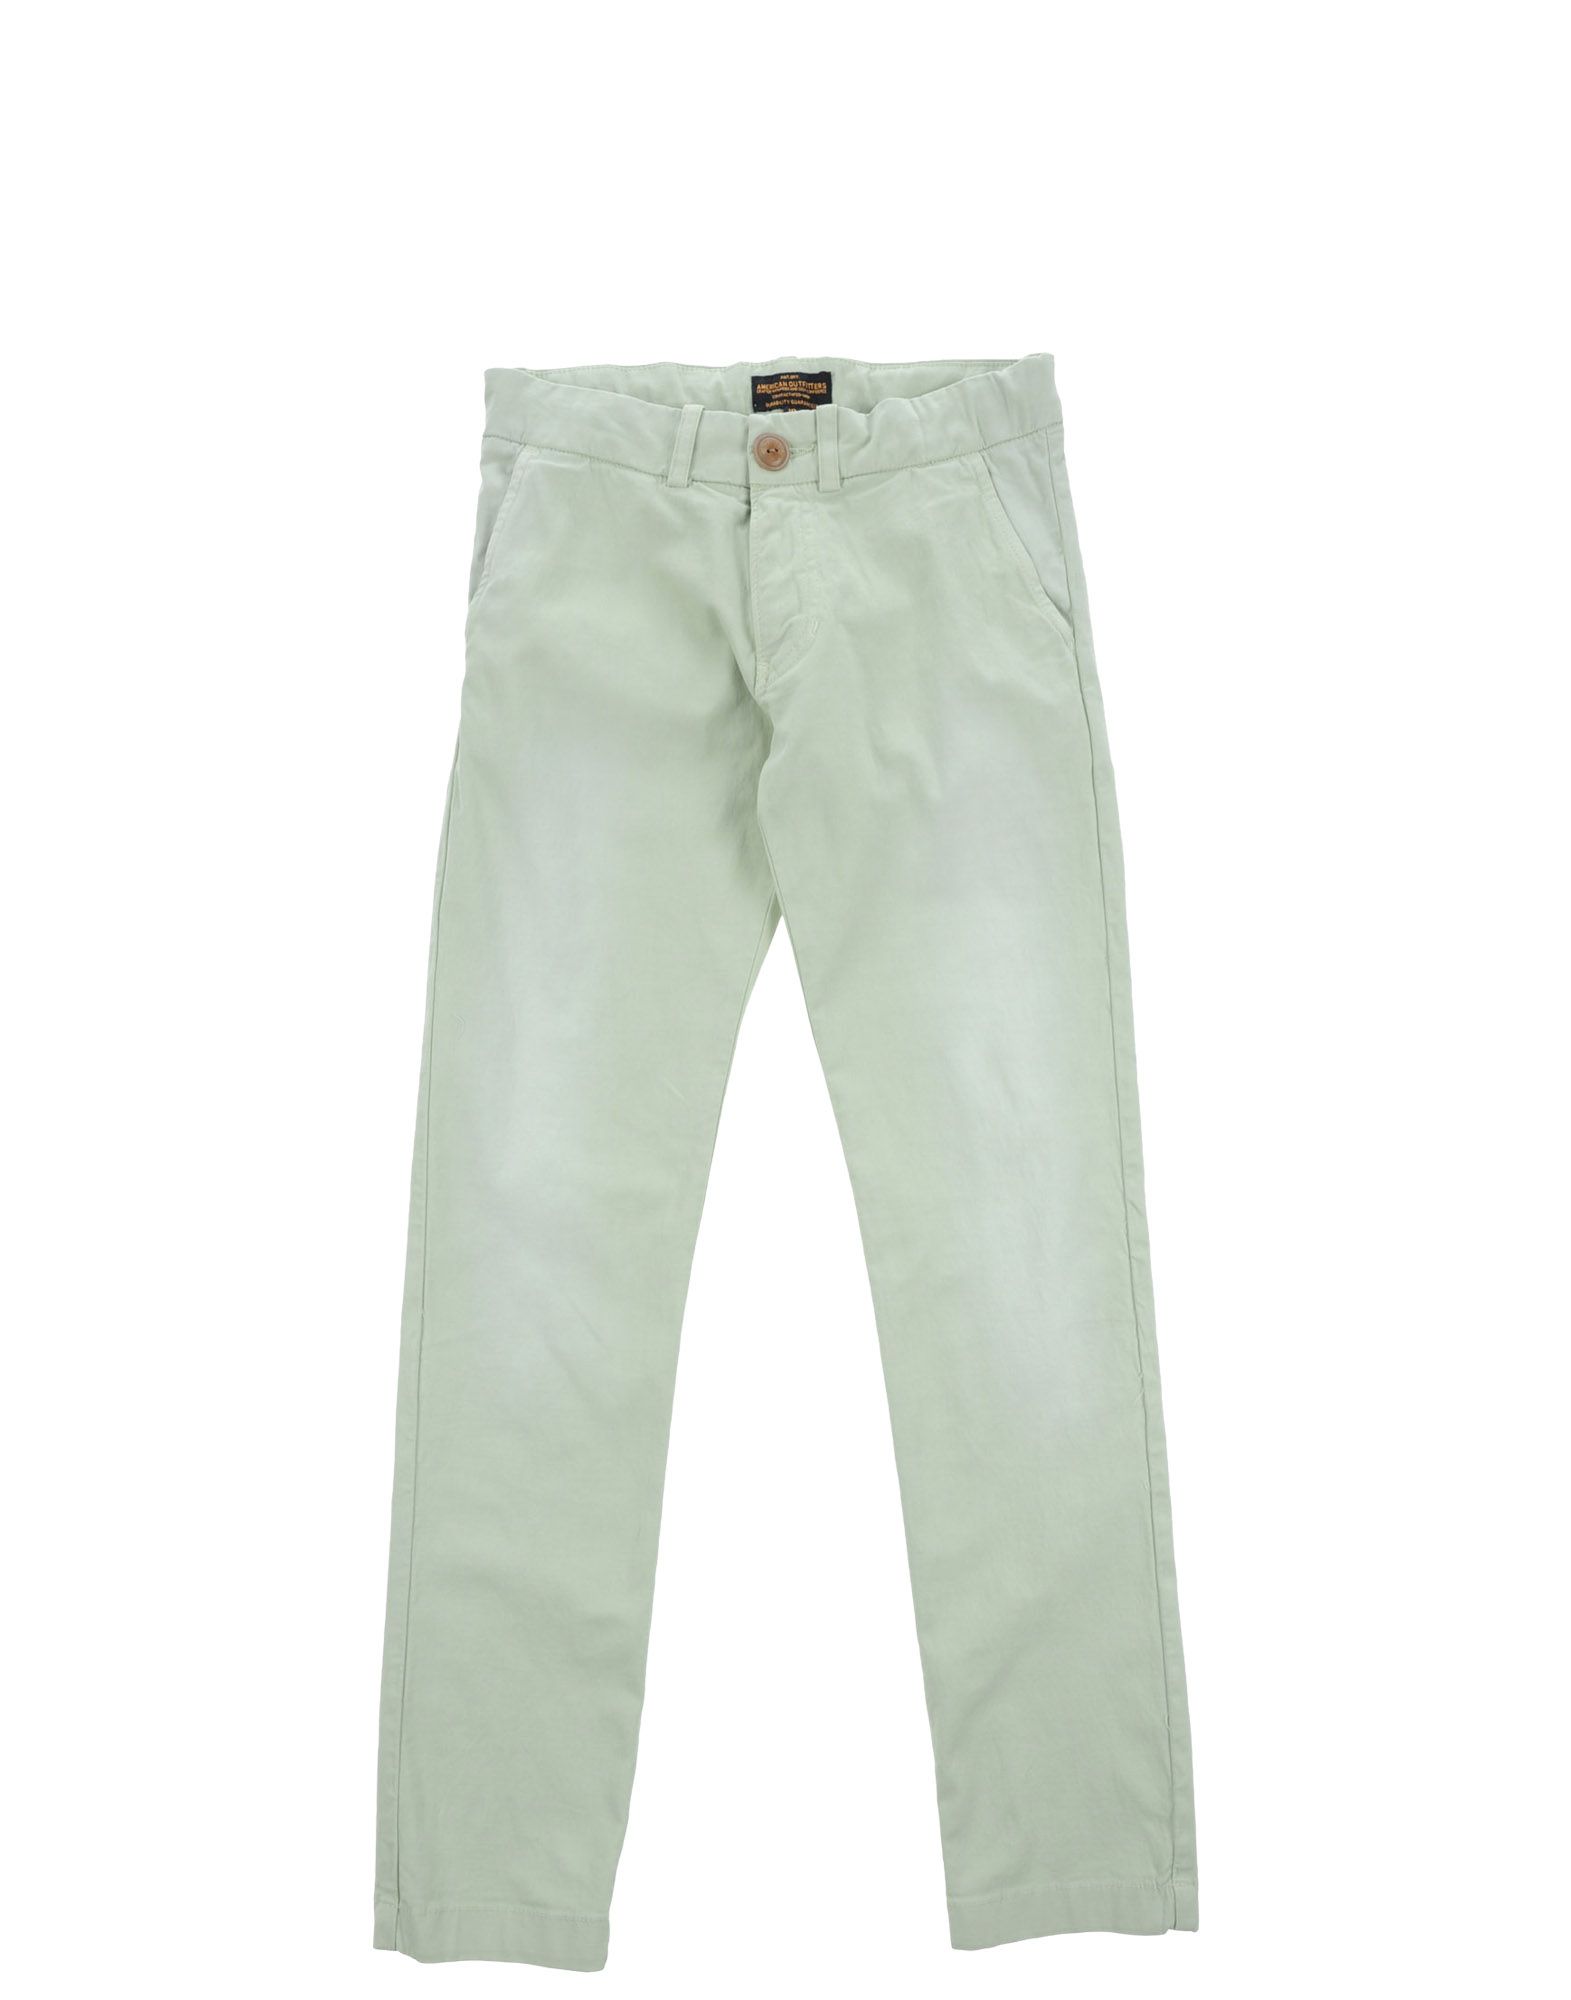 Foto American Outfitters Pantalones Niño Verde claro